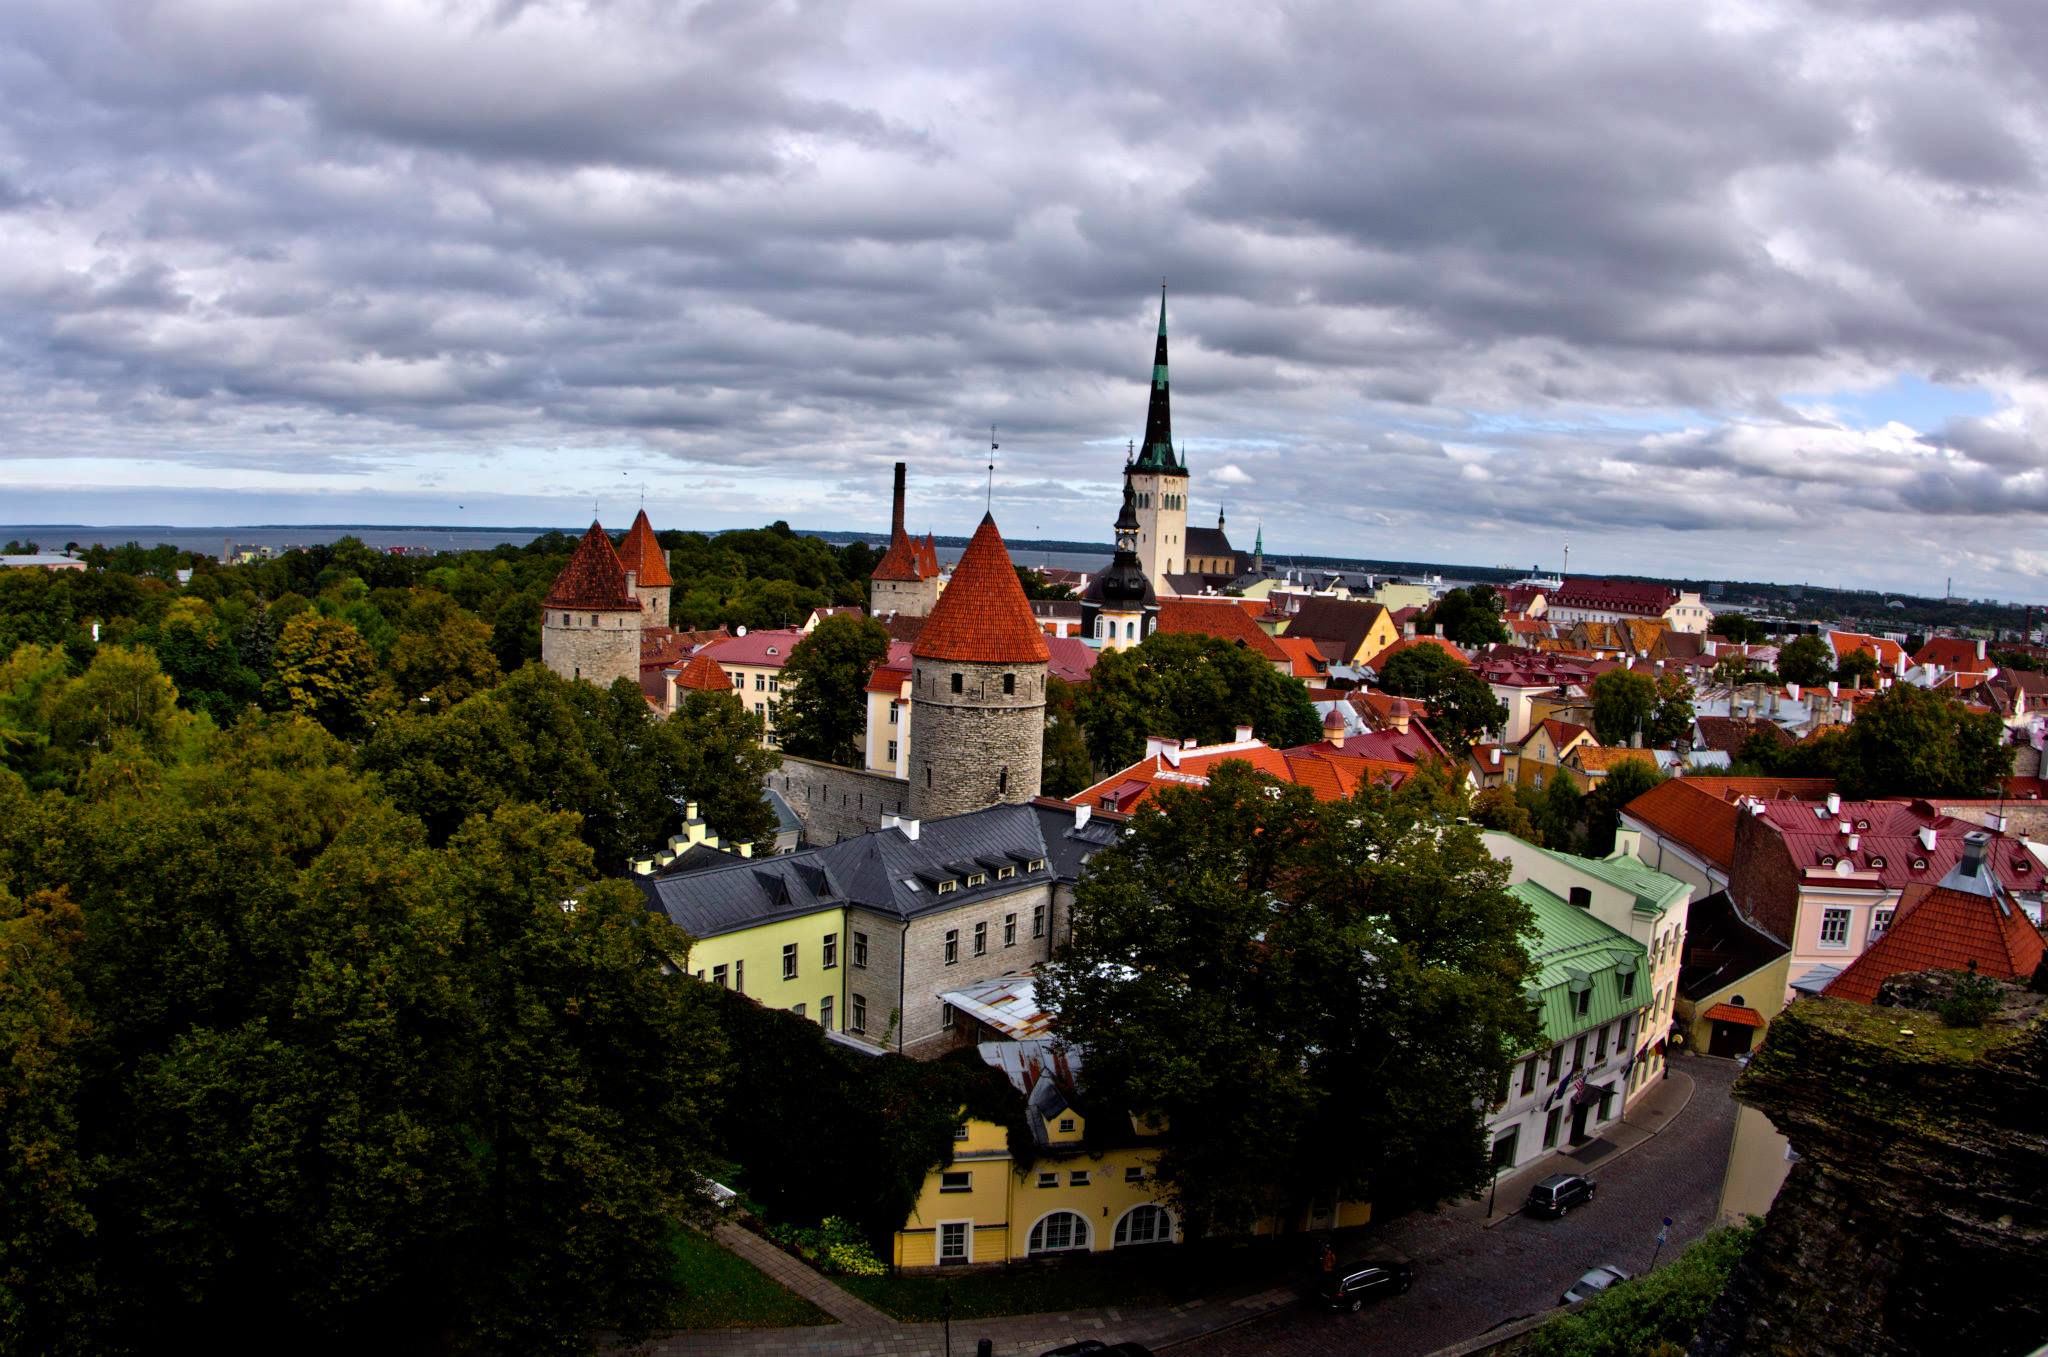 cosas que hacer en estonia, tallinn, tallin, pärun, olaf, estonia, cosas que hacer, museo kumu, takemysecrets, tourism, turismo, trip, travel, viaje